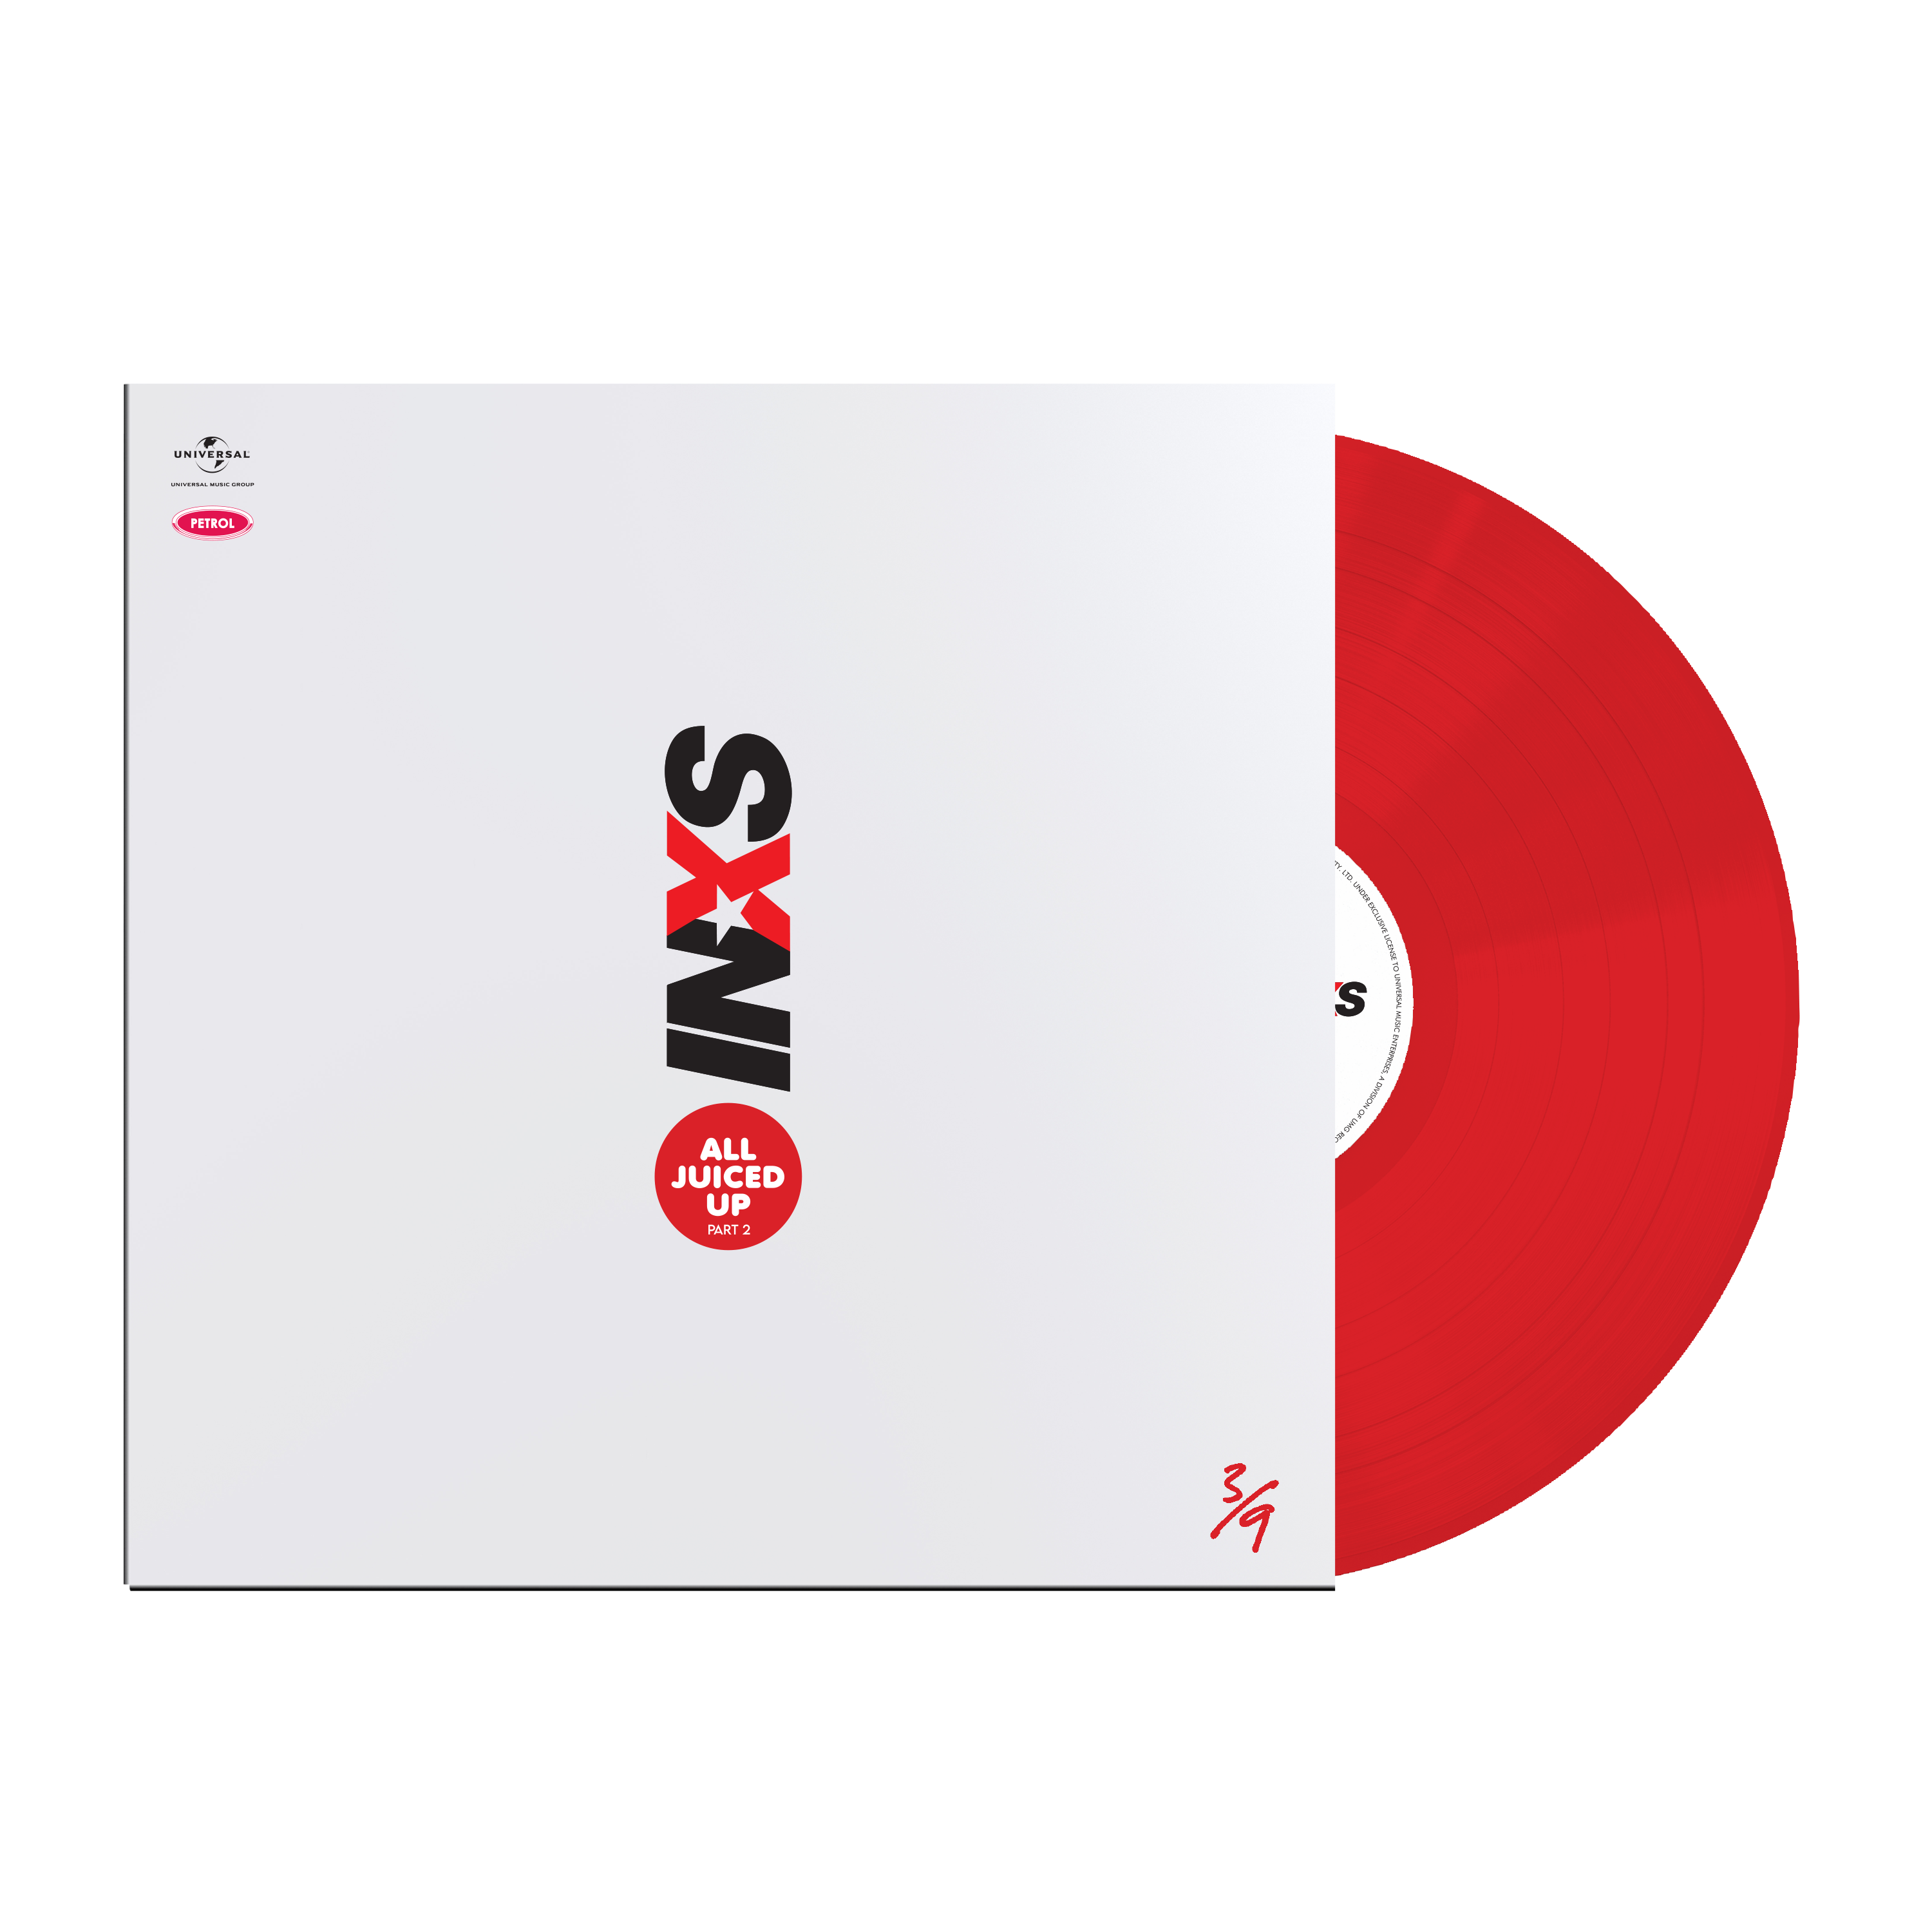 INXS - All Juiced Up Part 2 – Vol. 3: Exclusive Red Vinyl LP